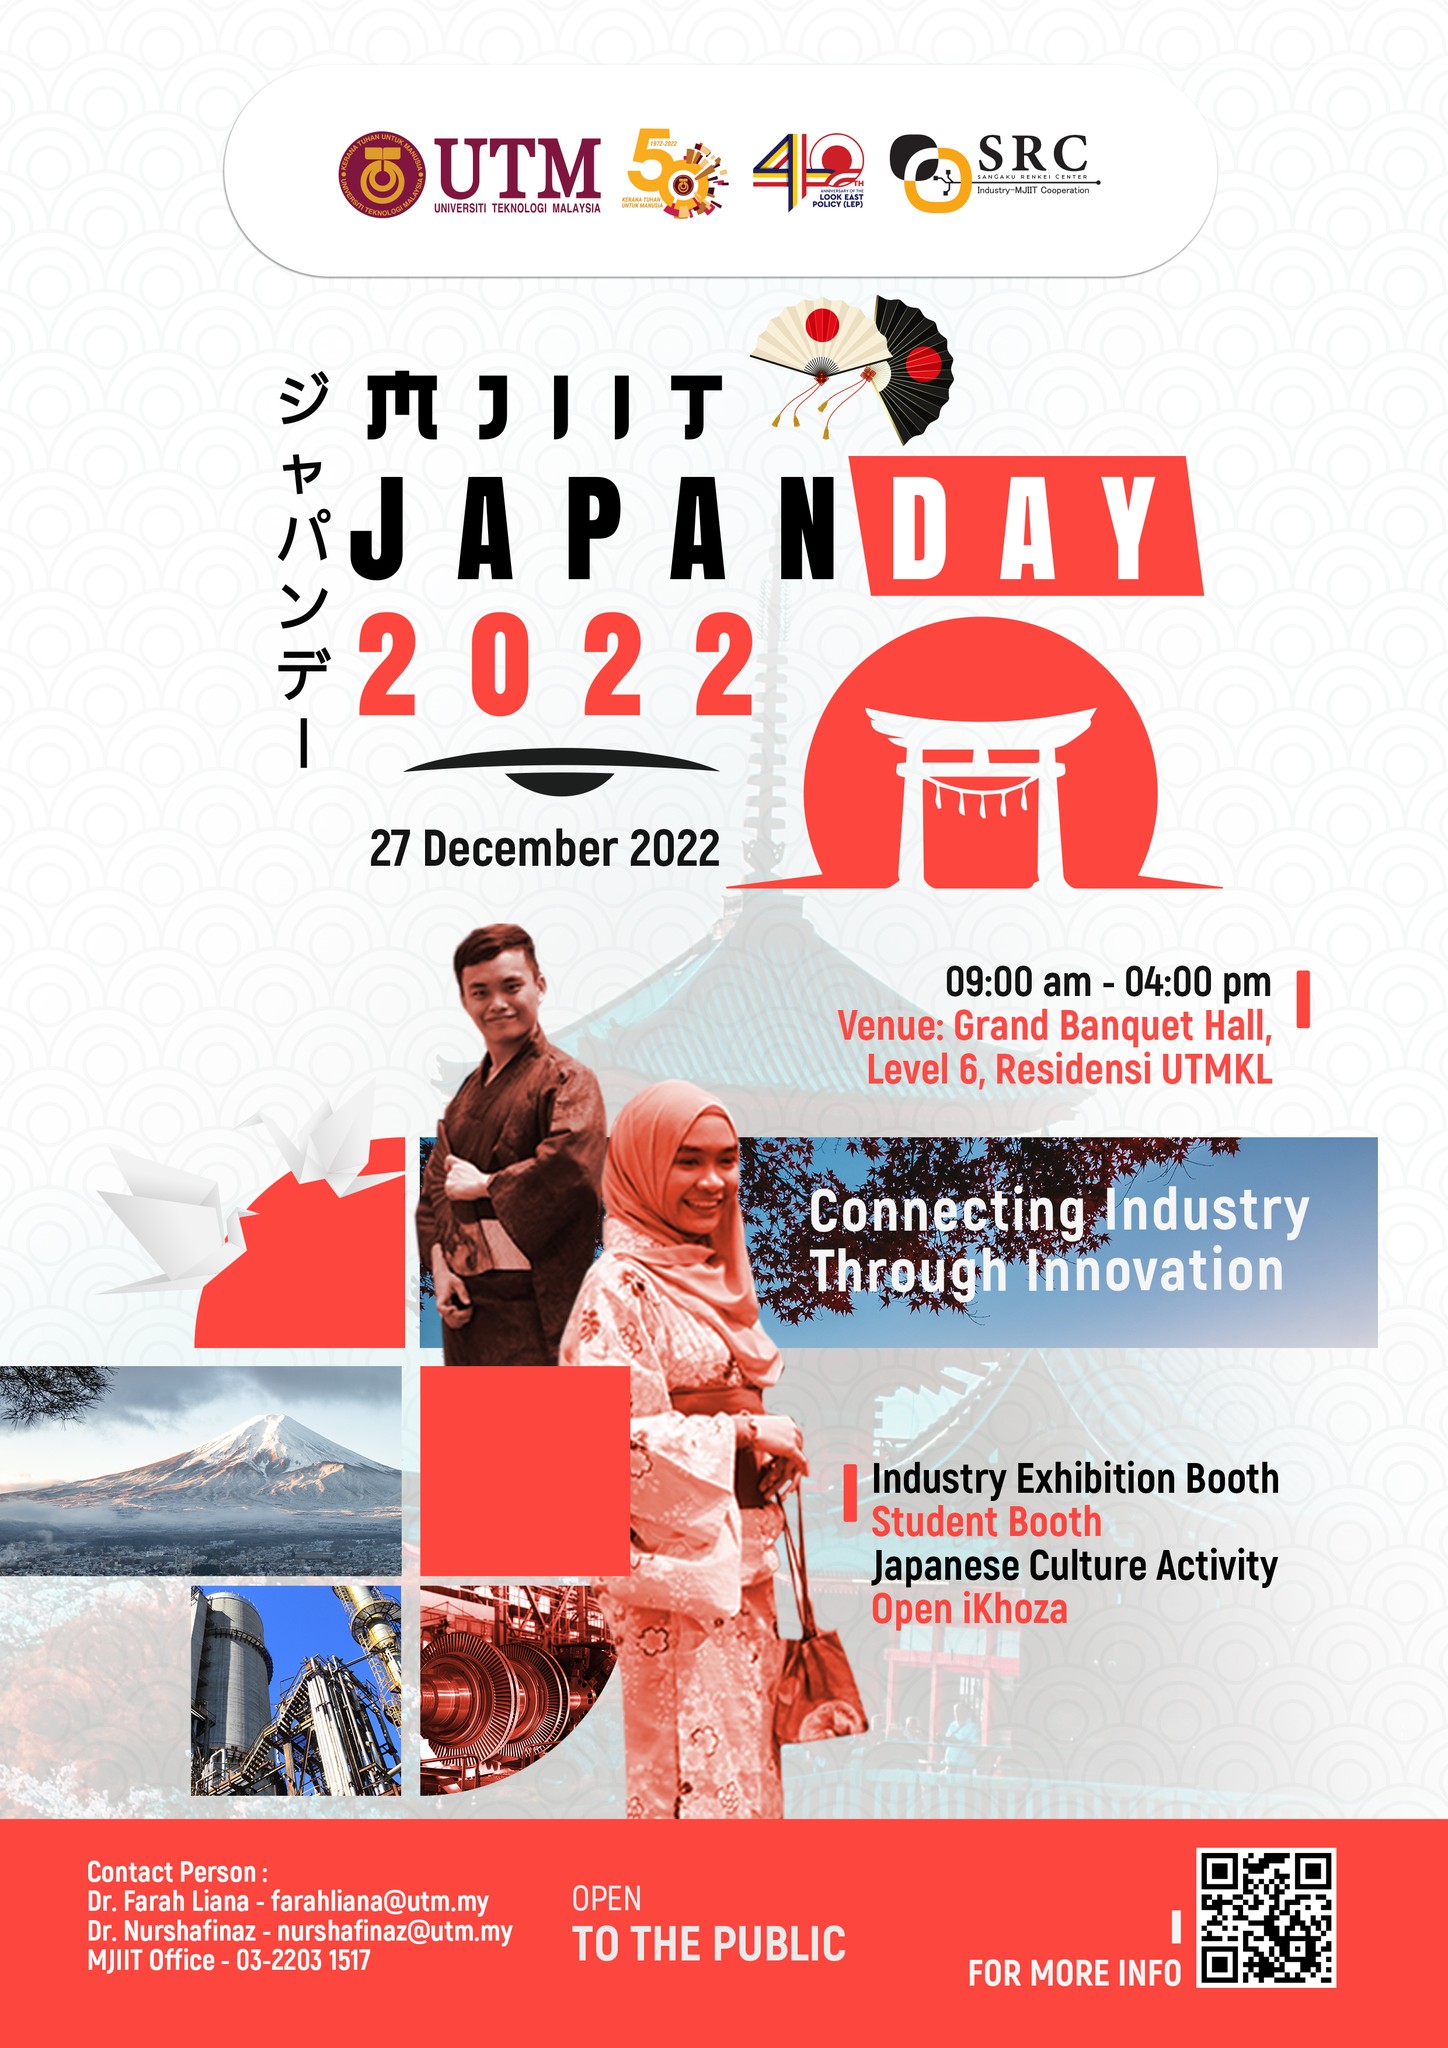 MJIIT Japan Day 2022